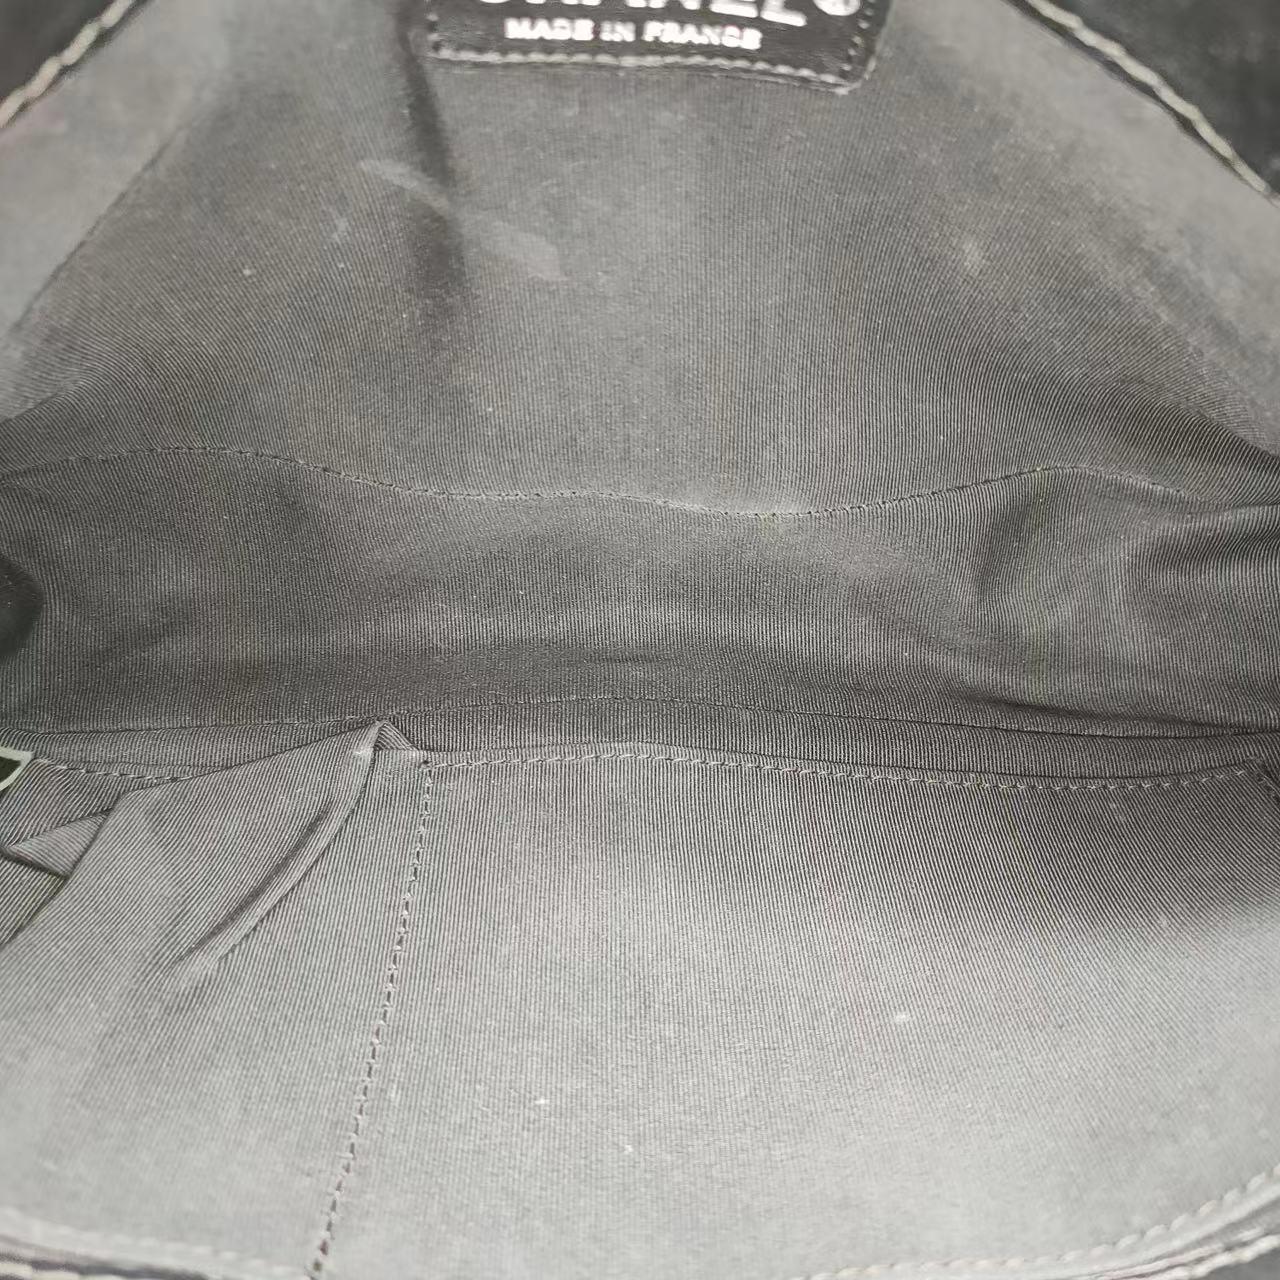 Chanel Enchained Boy Bag 2012 Black Leather Medium Flap Bag For Sale 10